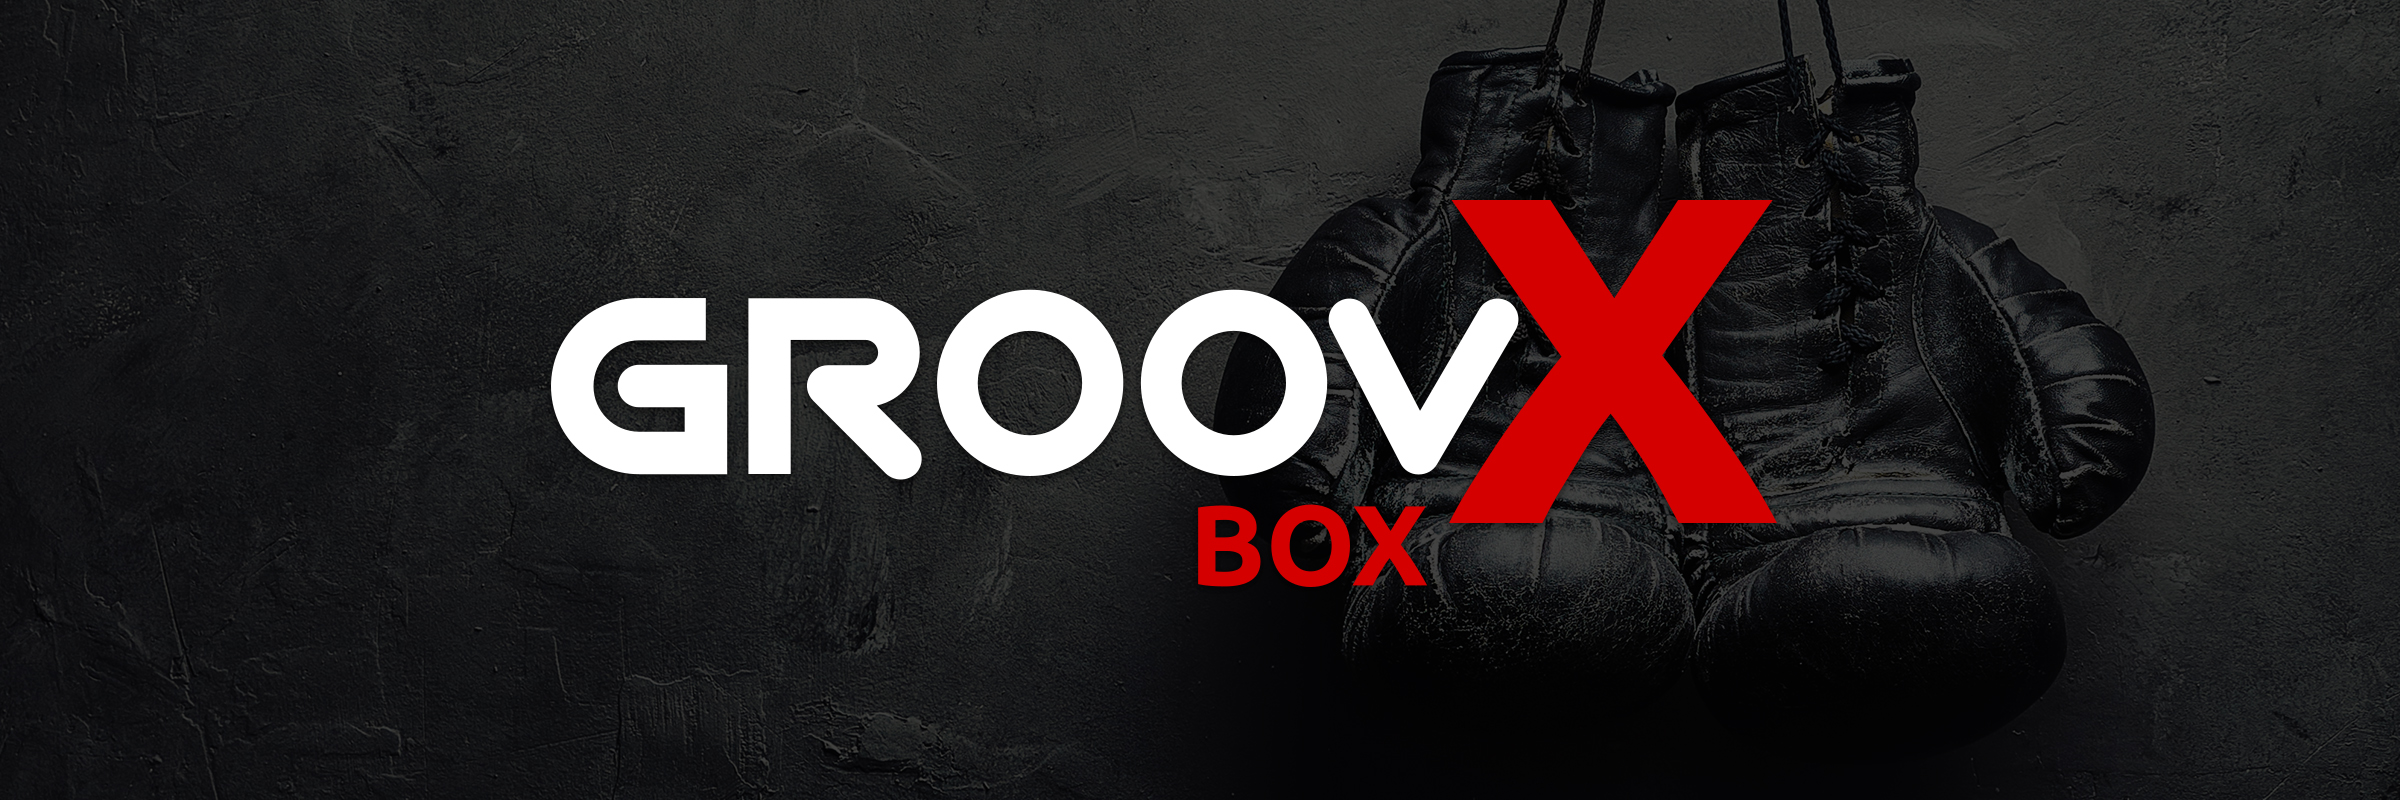 GroovX Box